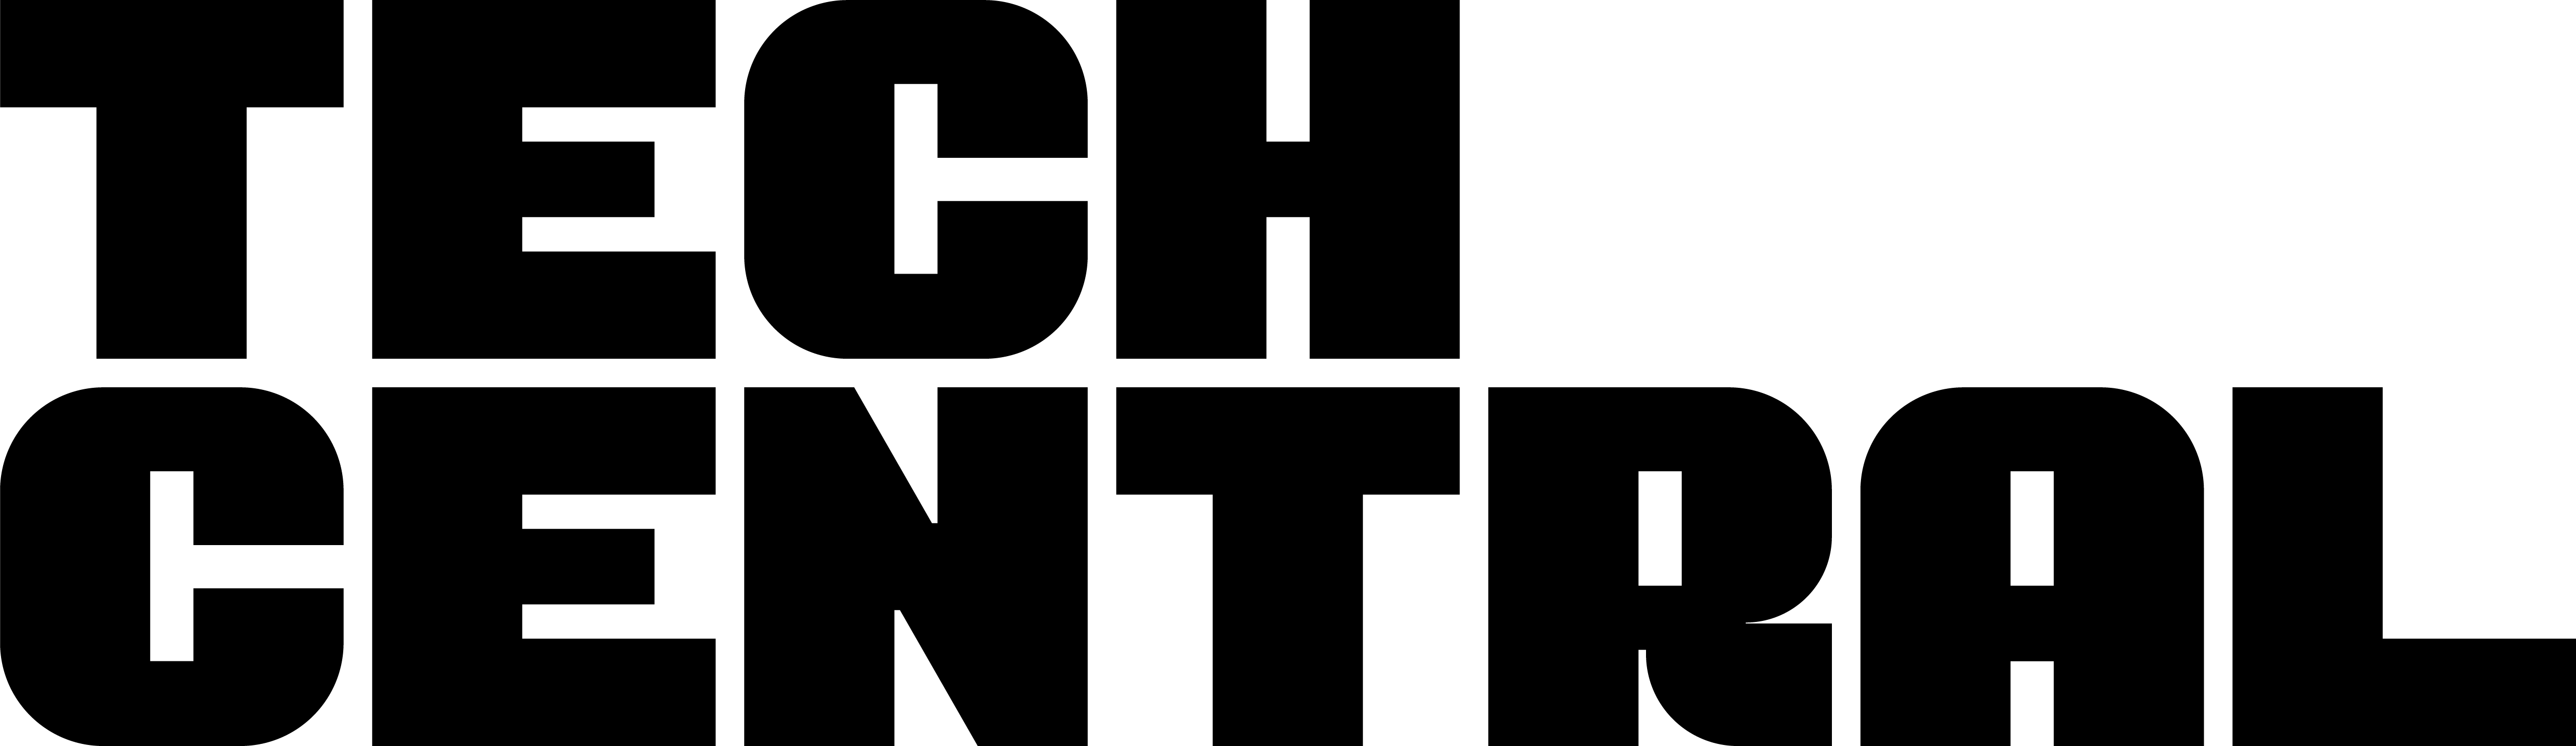 tech-central-logo-2-line-black-_-png